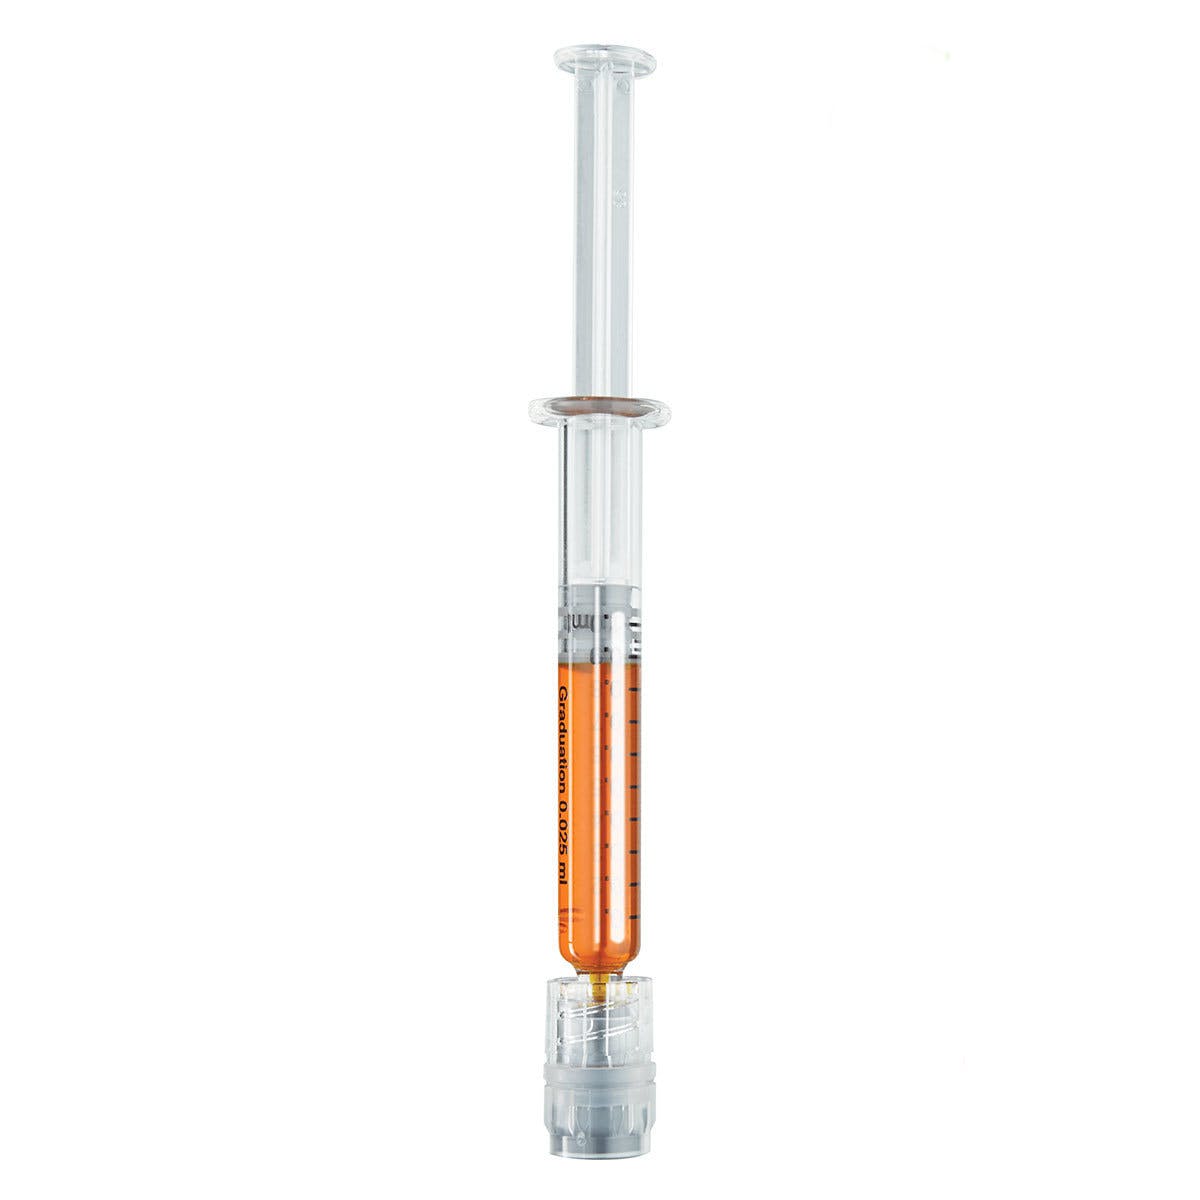 Oil Stix Syringe, 1g